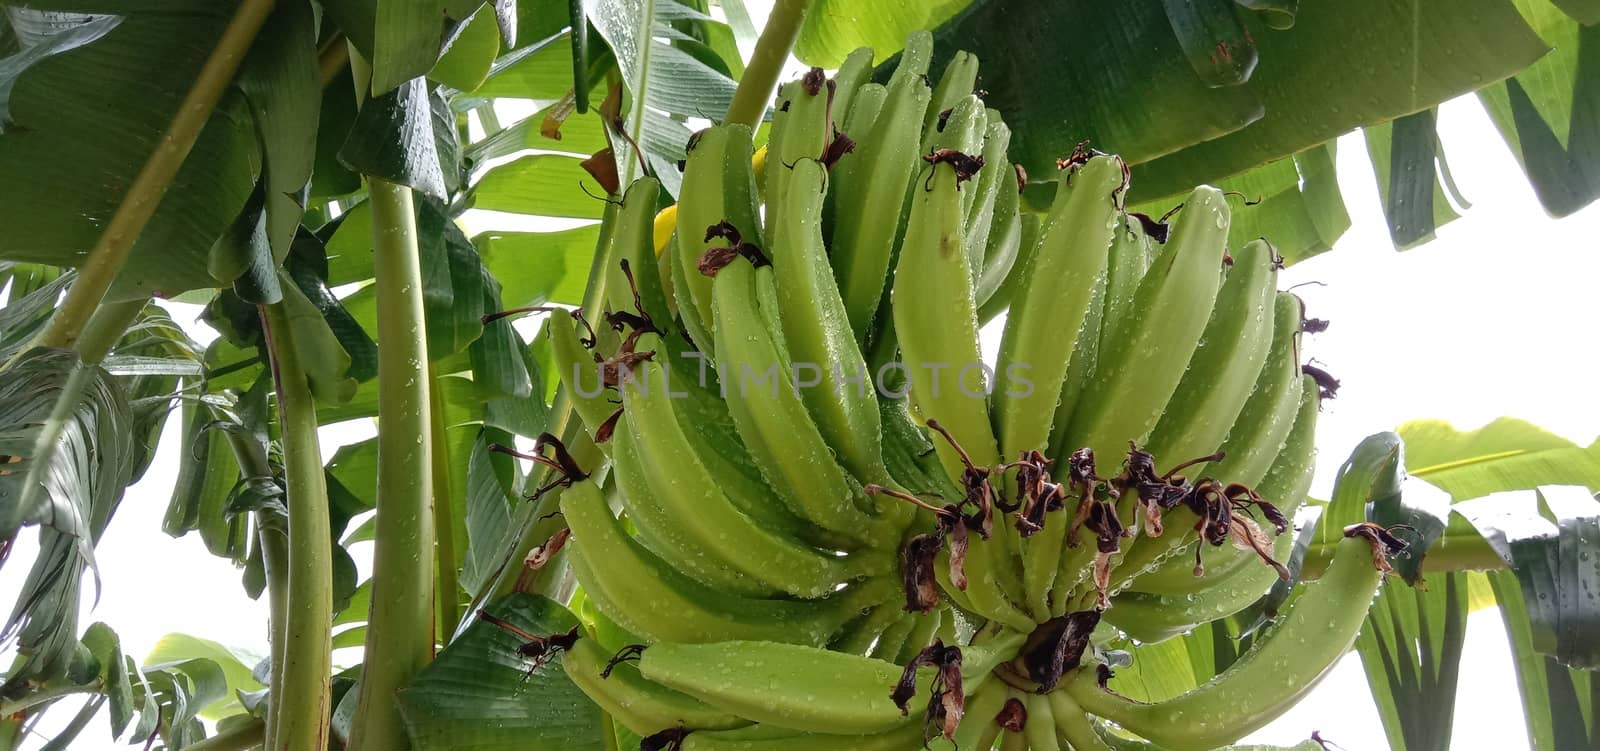 tasty and healthy raw banana bunch on garden